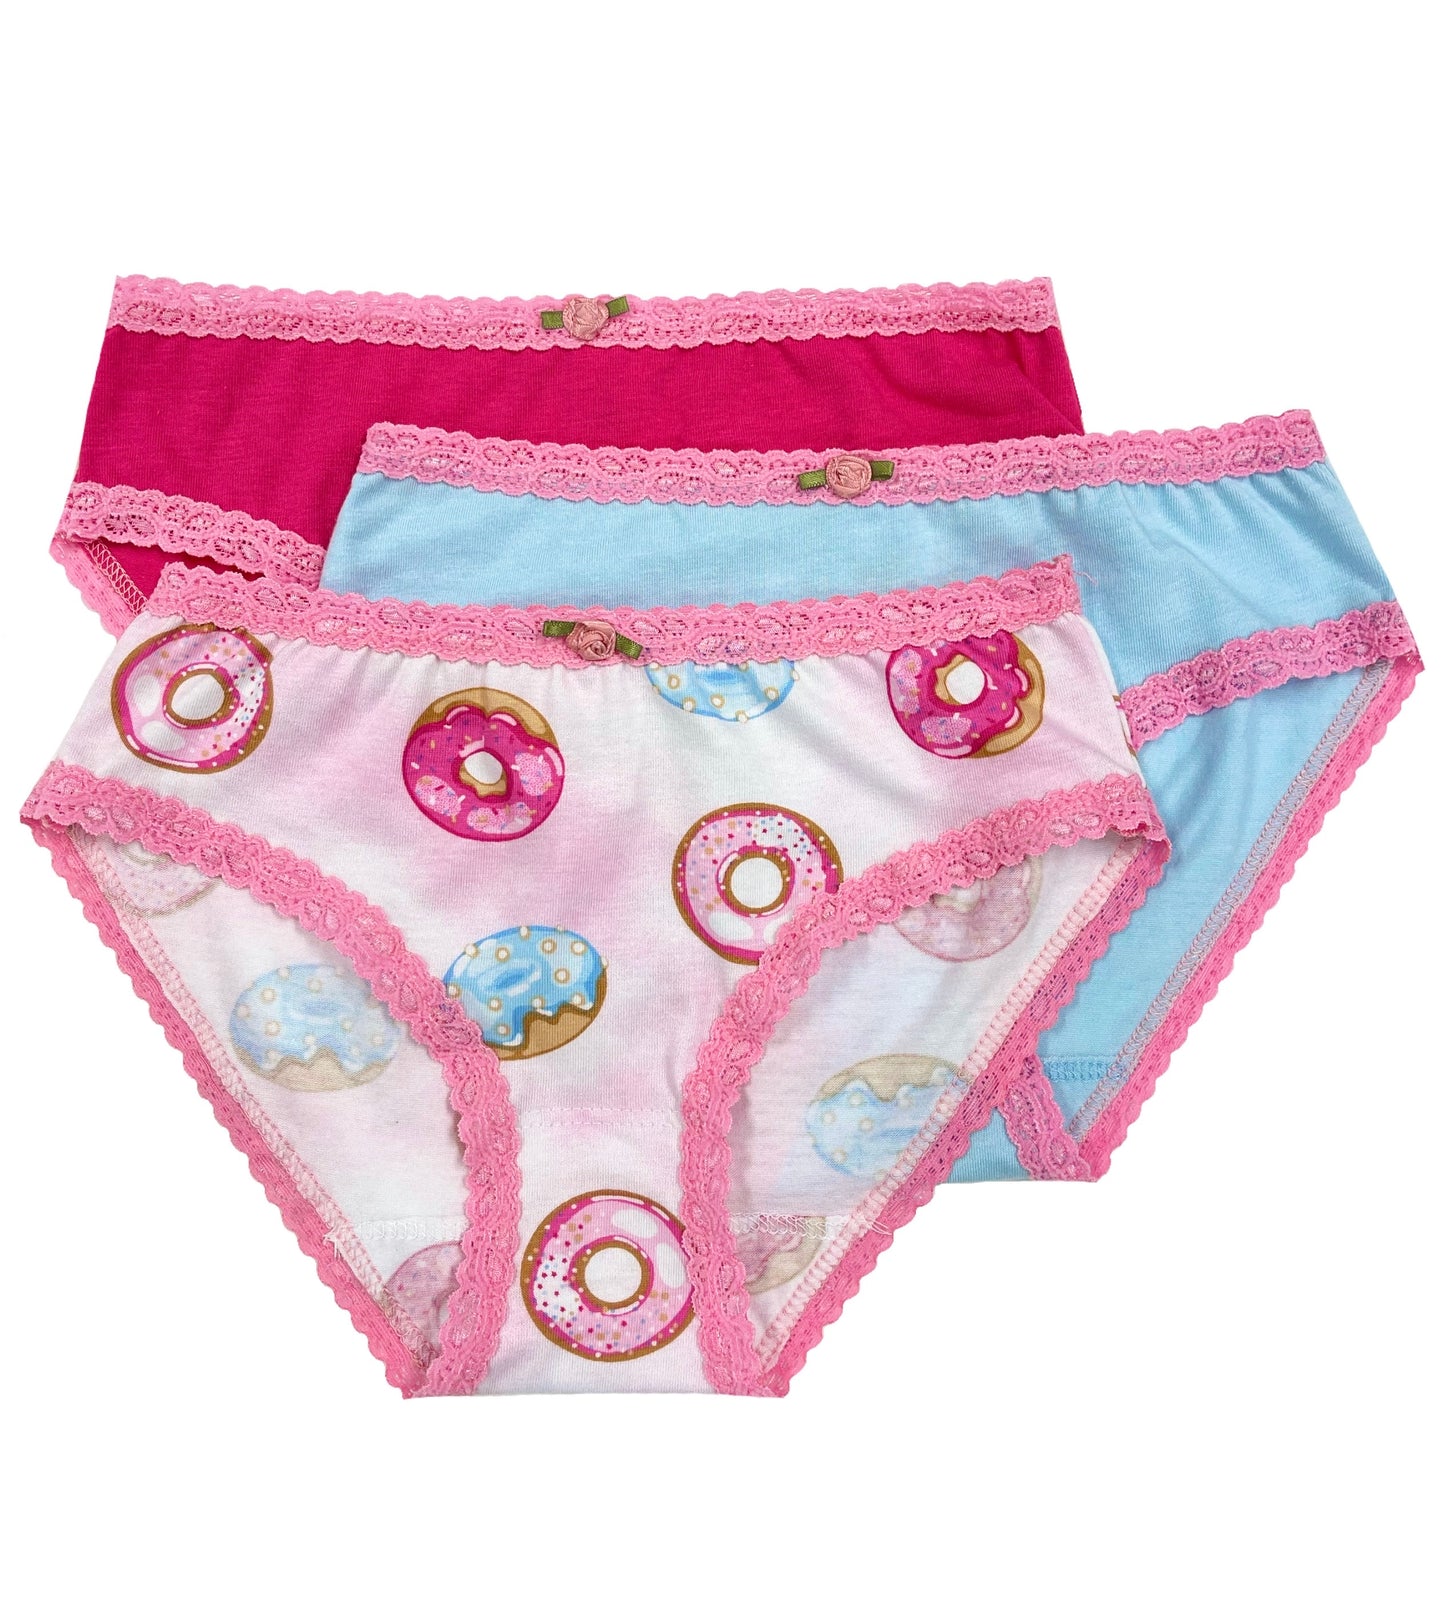 Domee Girls Underwear Cotton Panties Briefs Pack of 12 Civet Cat +